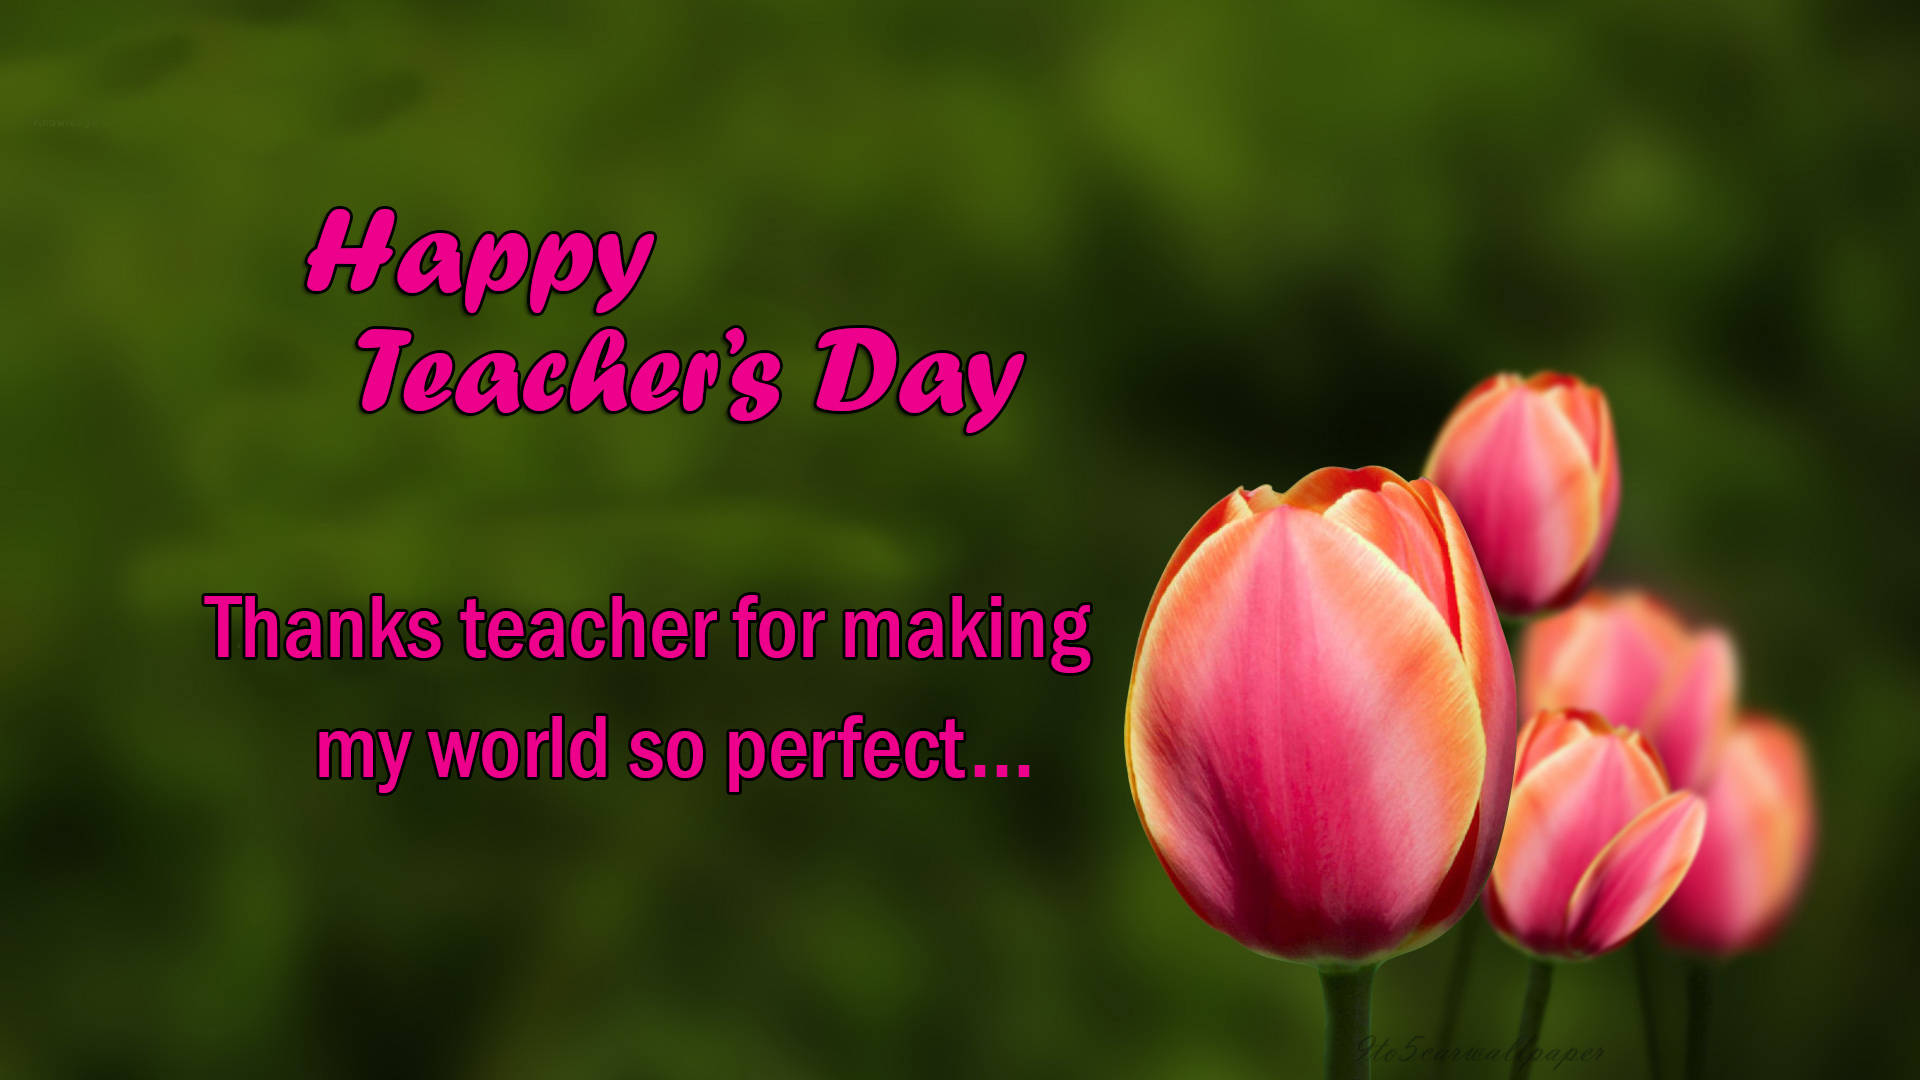 Happy Teachers' Day Perfect World